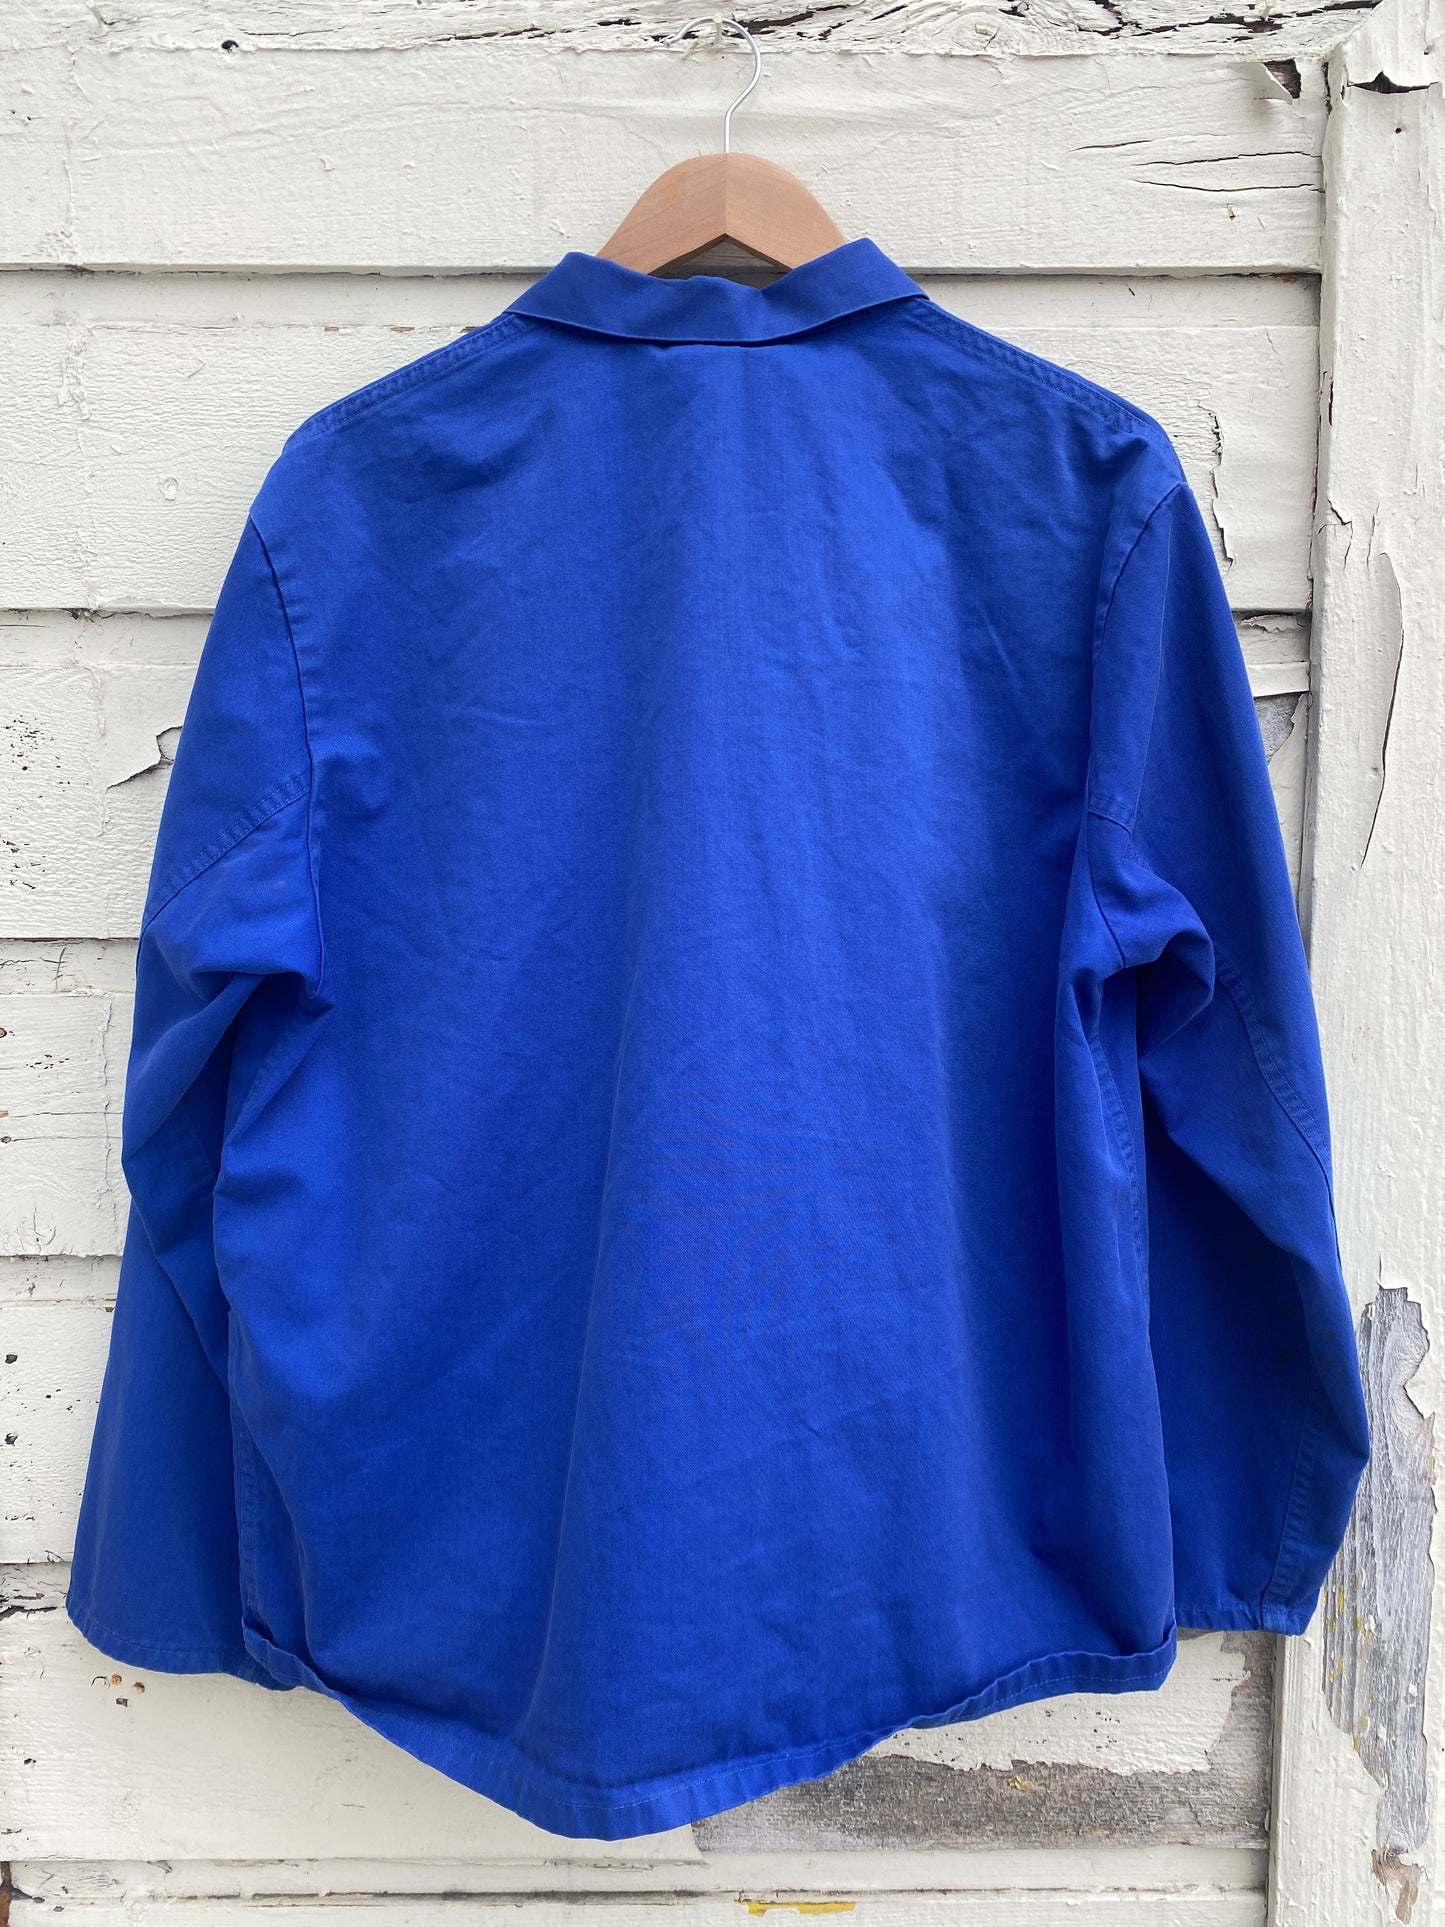 Classic French chore coat 3 pockets Large/XL